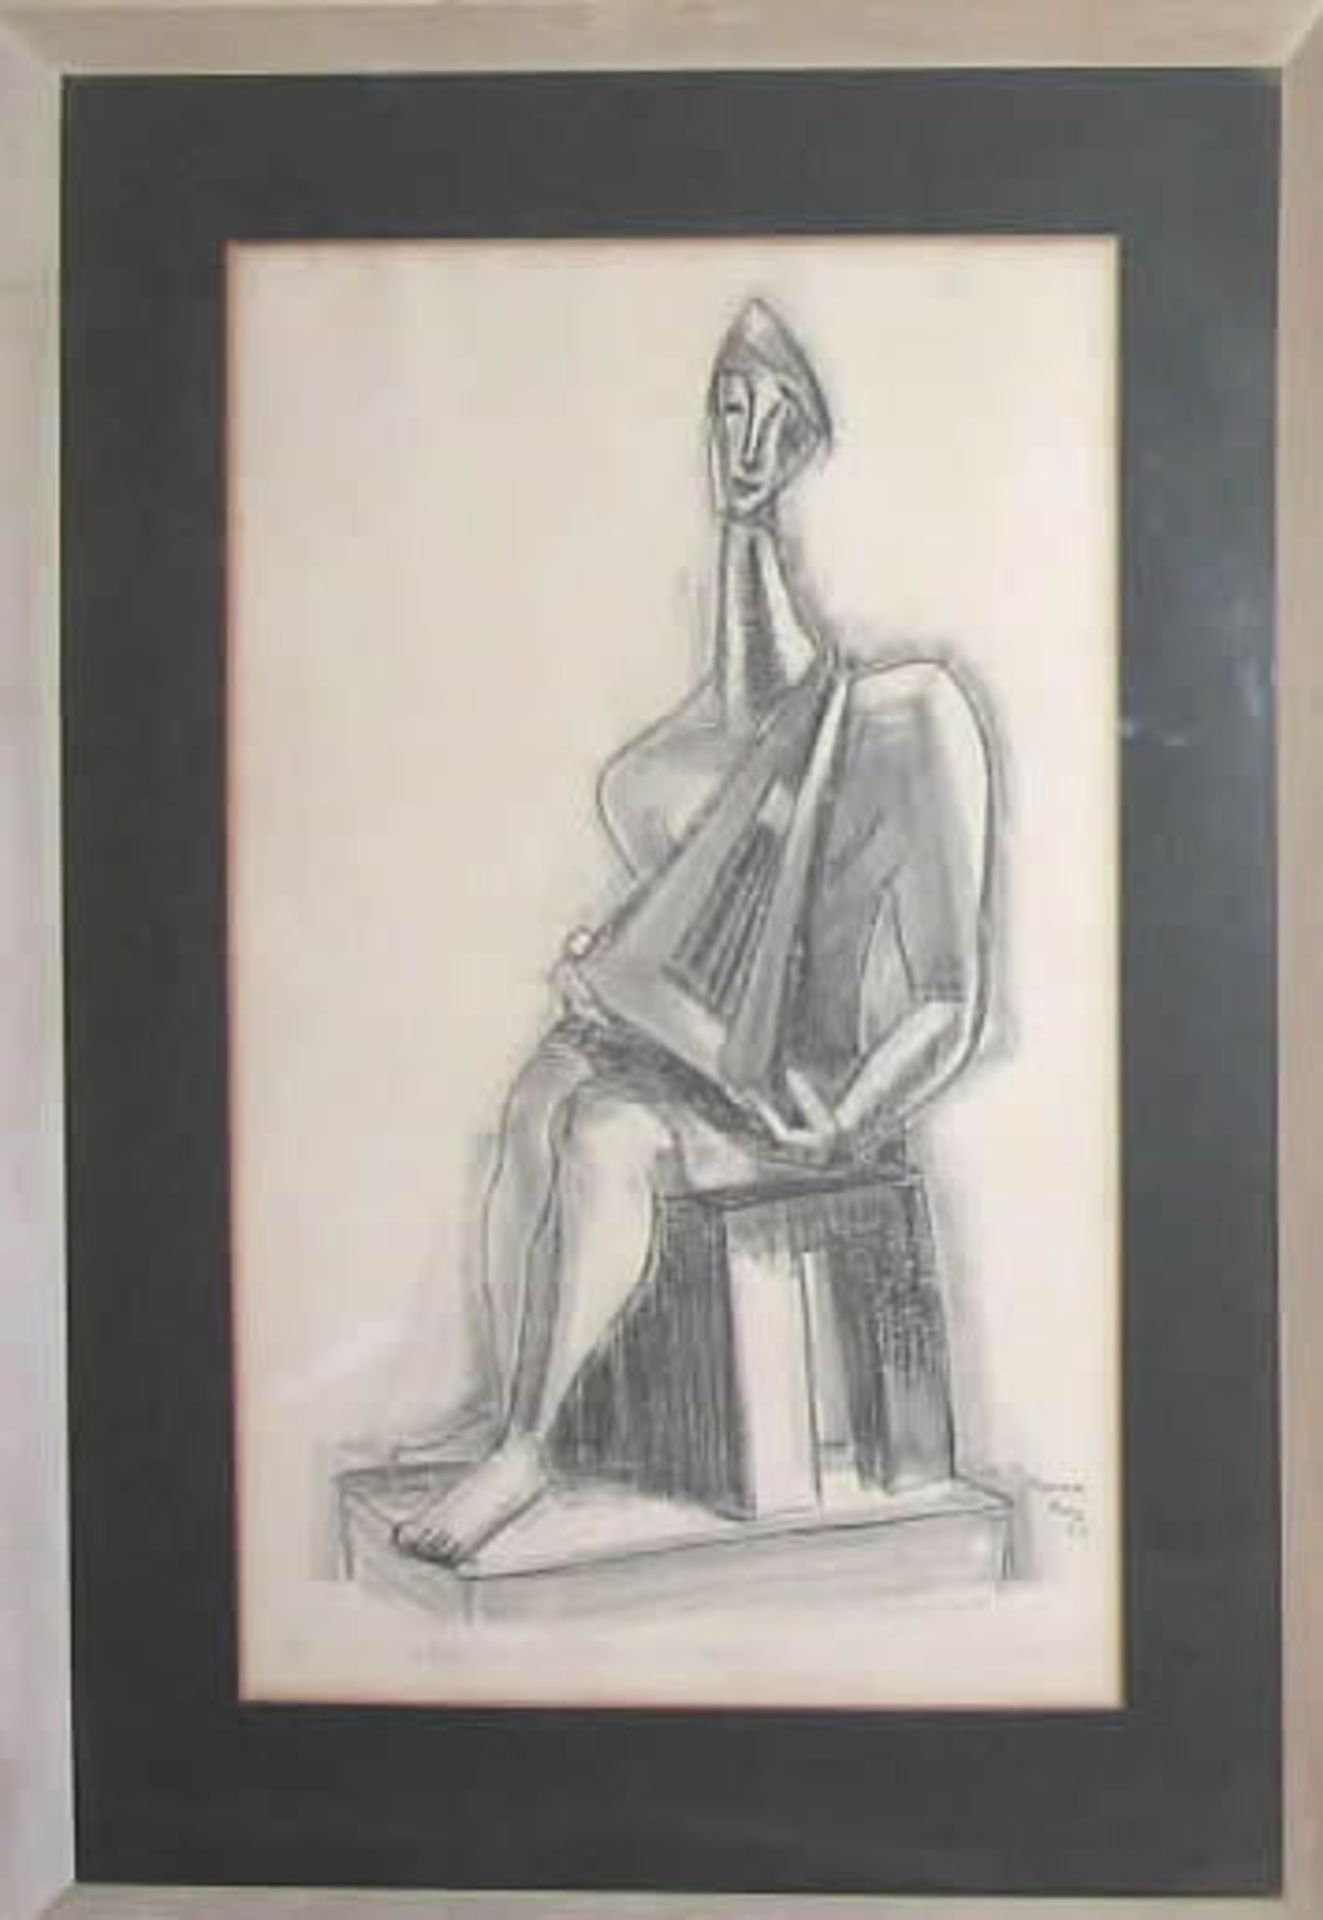 Seated figure with Harp, Print 2/25, Signed Marek Szwarc 1955